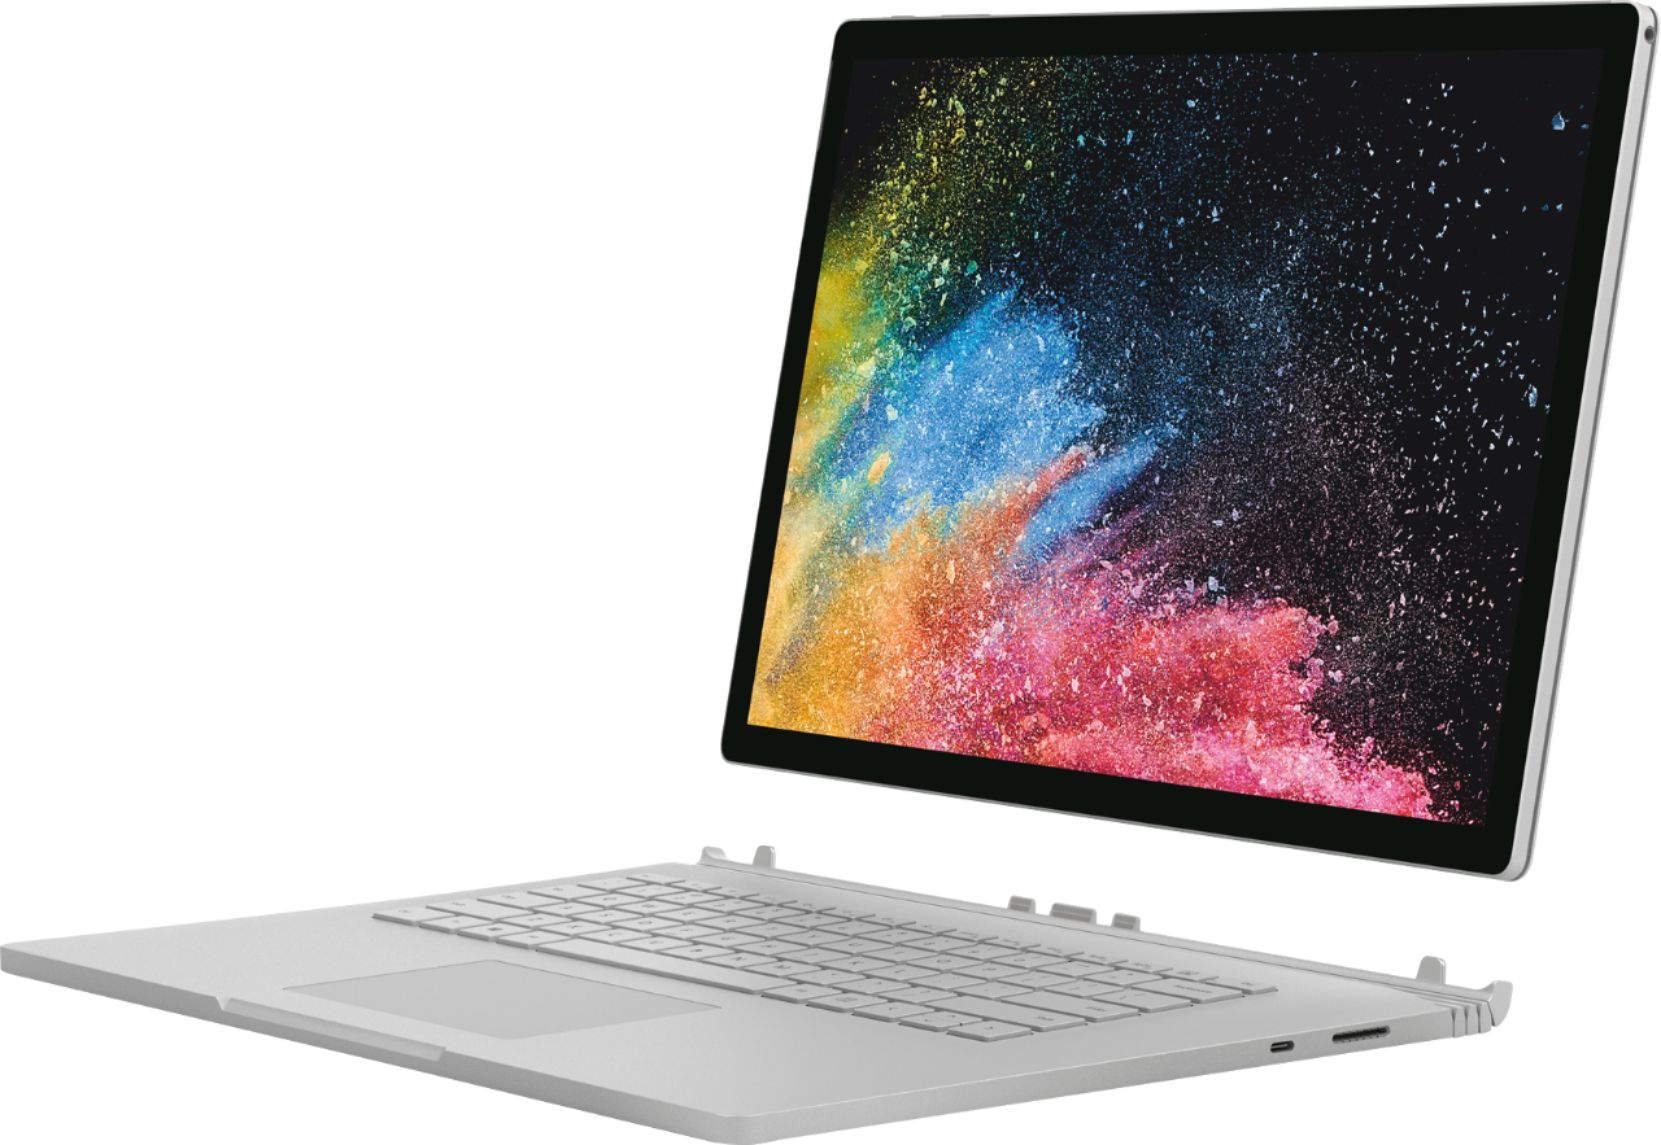 Angle View: Microsoft - Geek Squad Certified Refurbished Surface Book 3 - Intel Core i7 - 32GB - NVIDIA GeForce GTX 1660 Ti Max-Q - 1TB SSD - Platinum